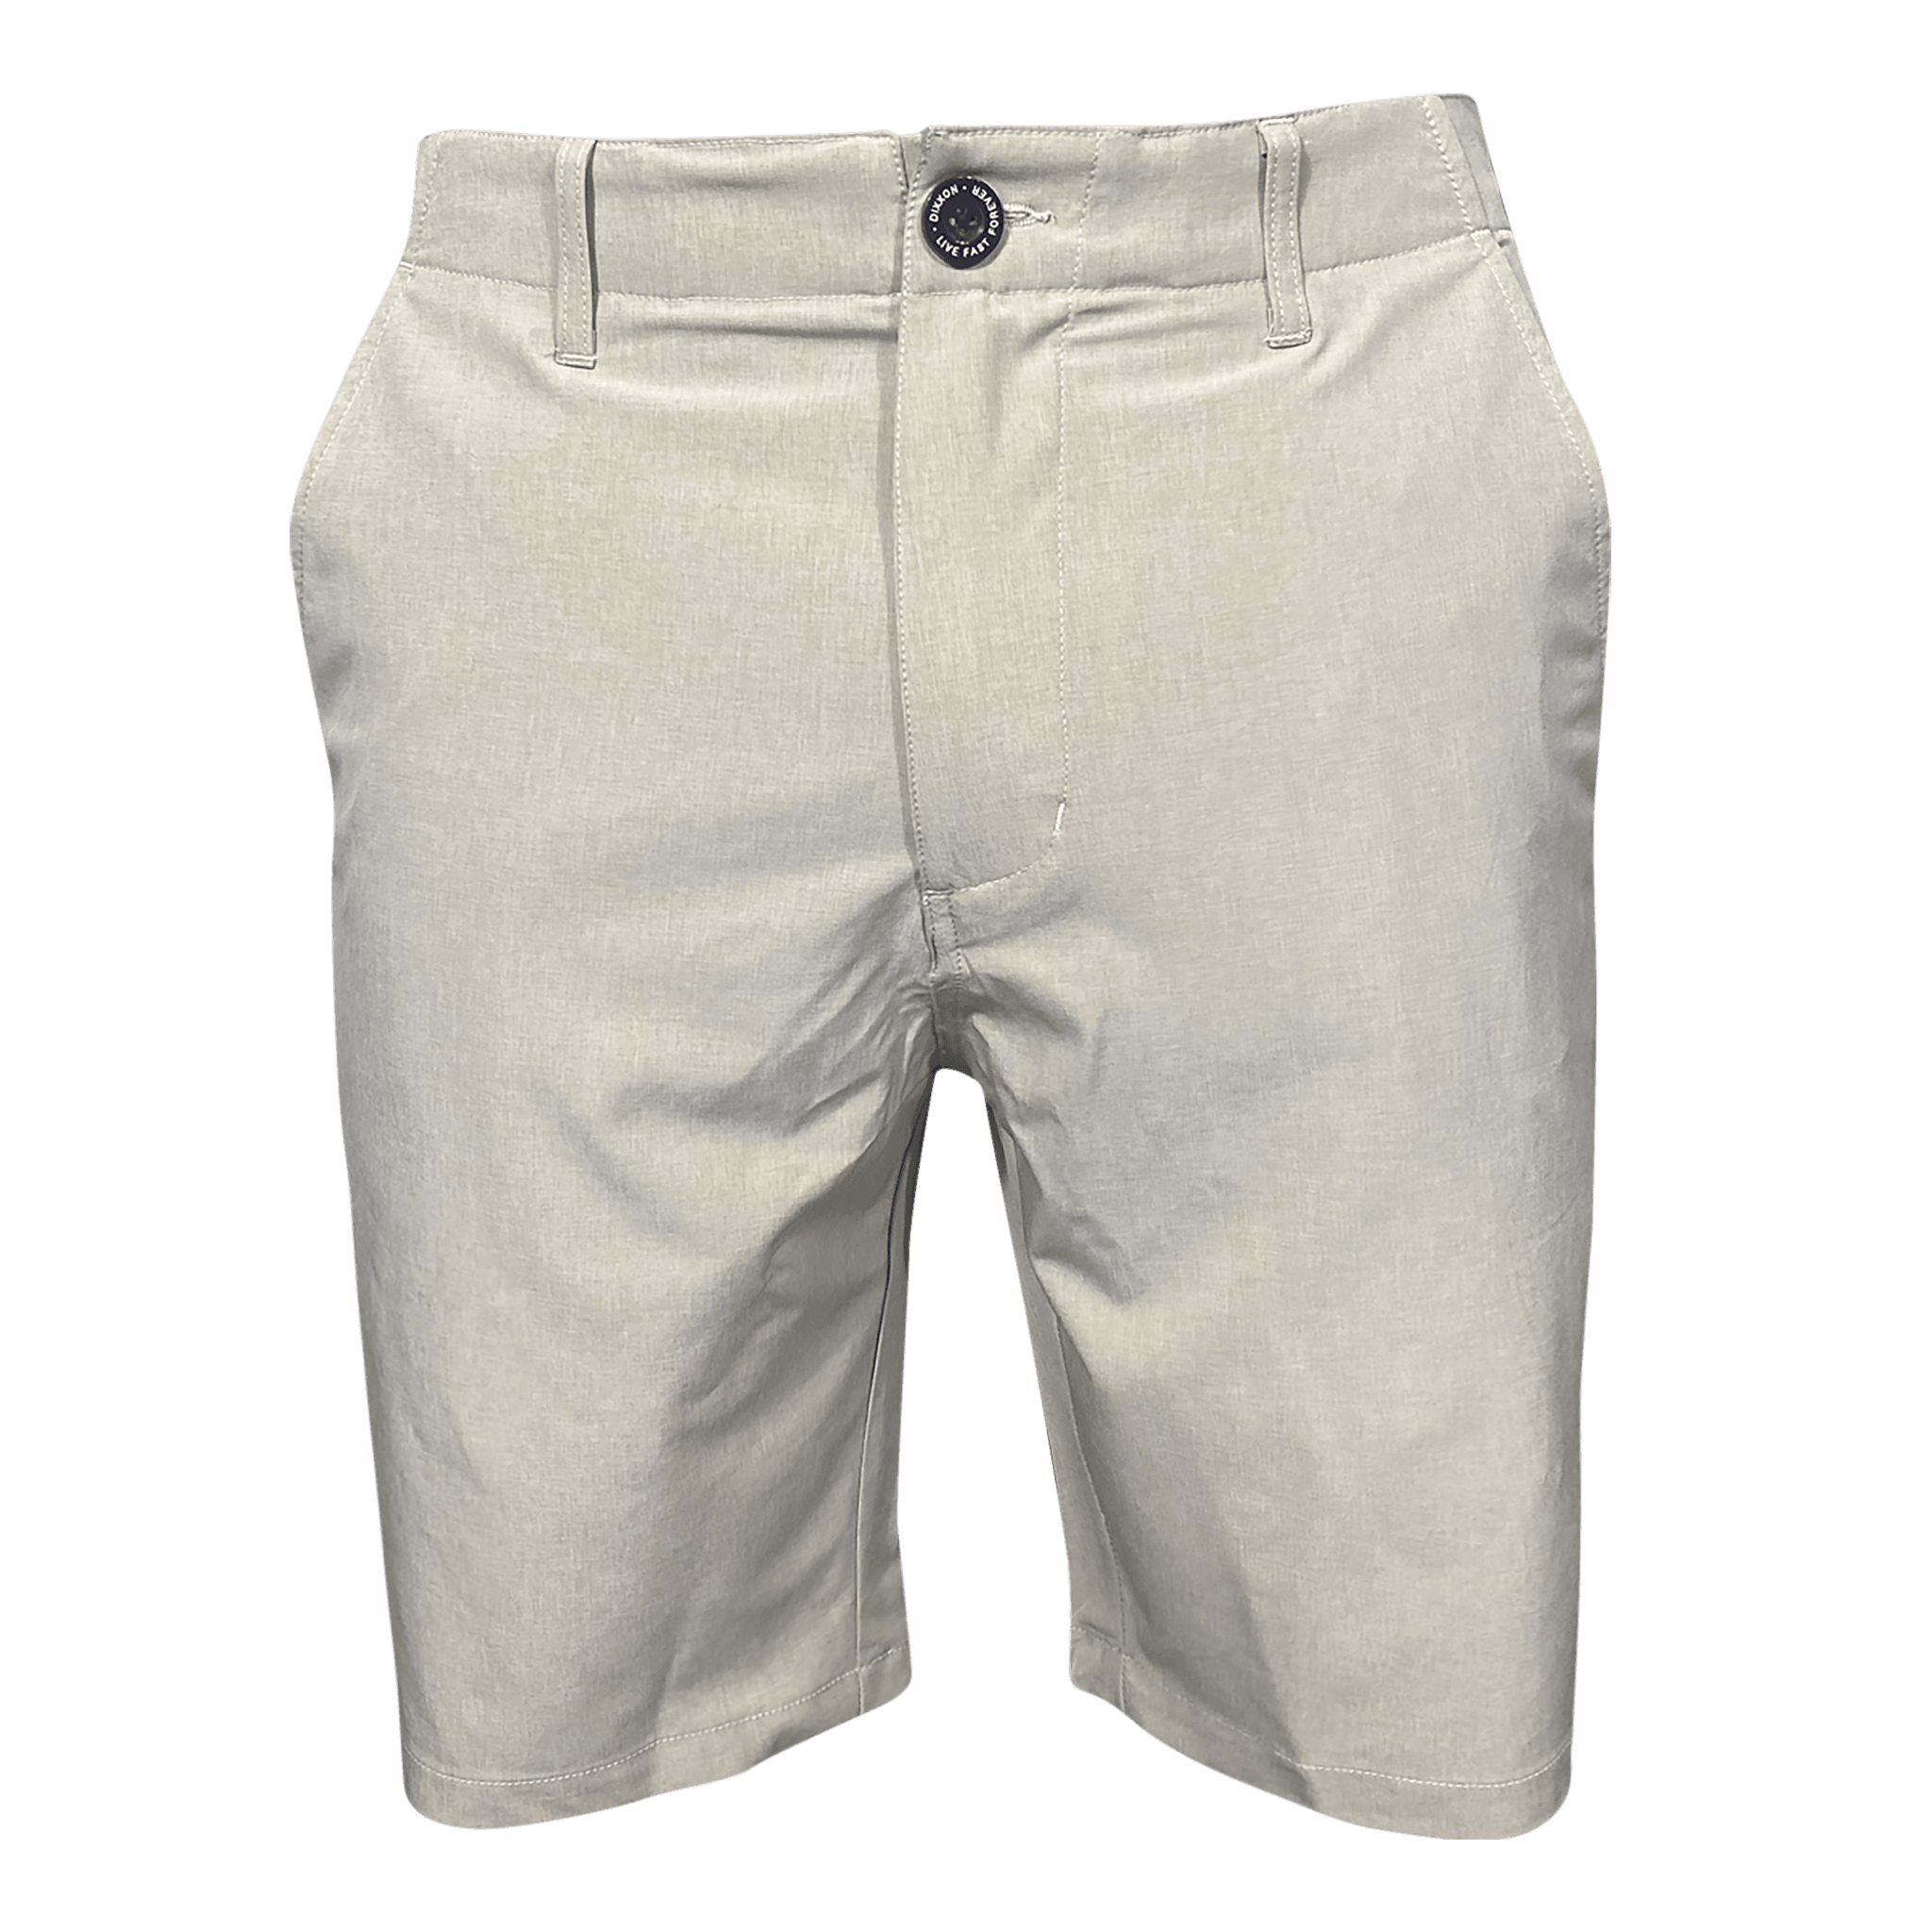 Hybrid Shorts - Khaki